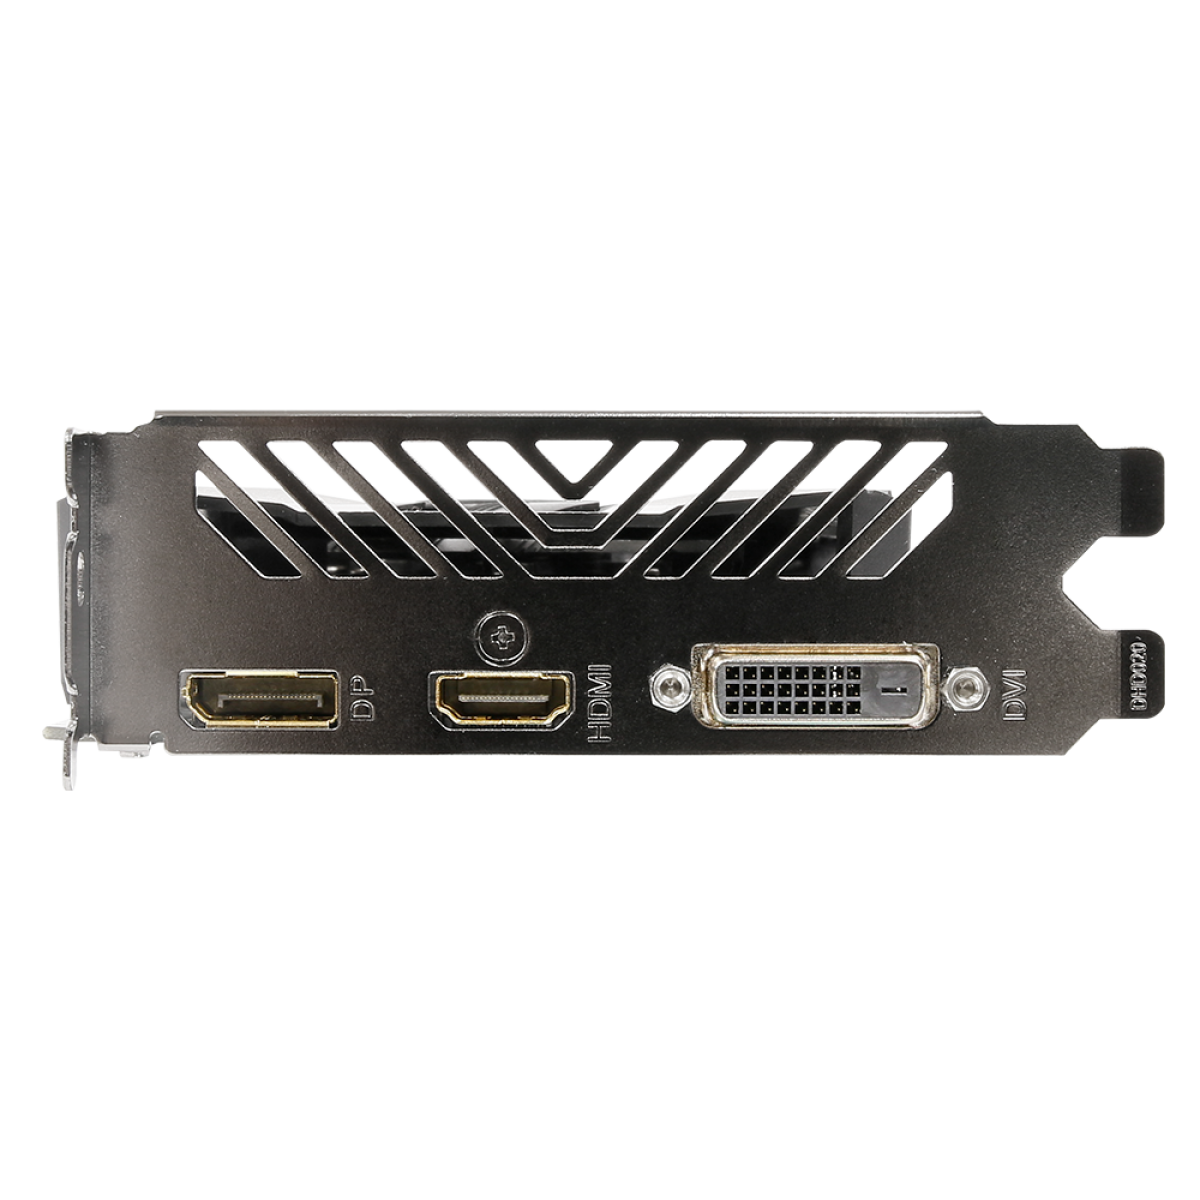 Placa de Vídeo Gigabyte GeForce GTX 1050 Ti, 4GB, GDDR5, 128bit, GV-N105TD5-4GD/Rev 1.1